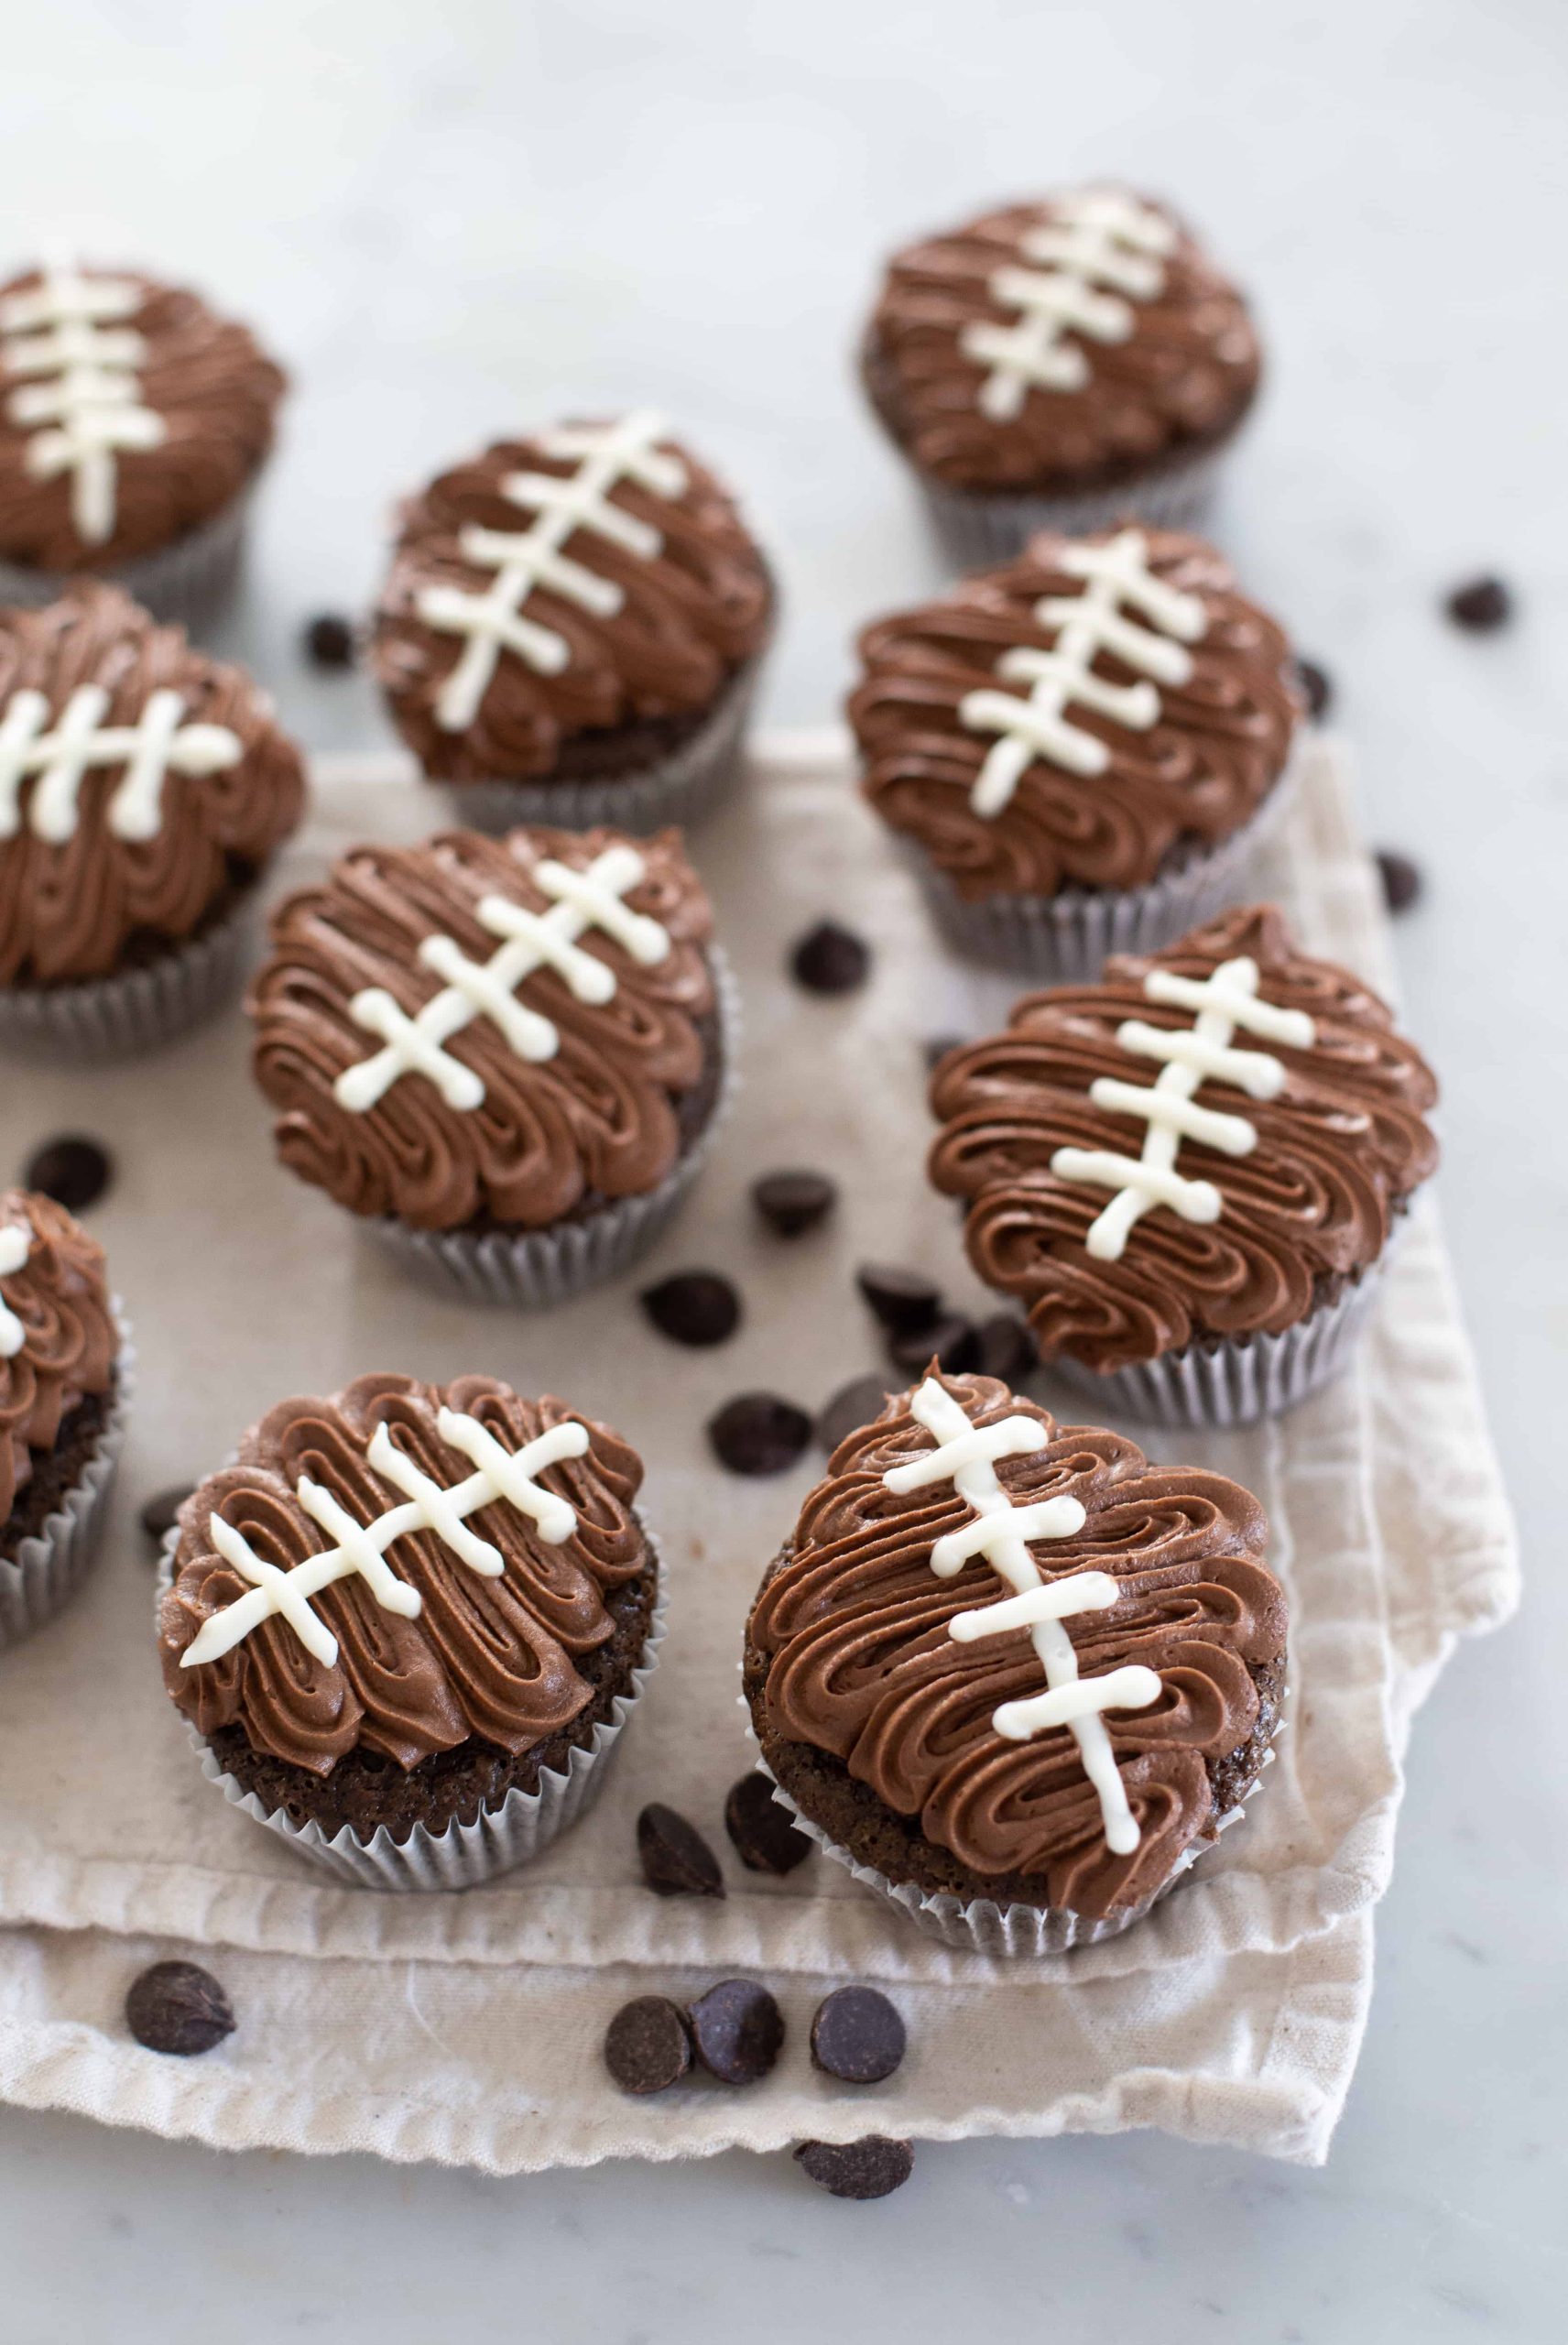 Football Shaped Chocolate Cake uae | Gift Football Shaped Chocolate Cake-  FNP